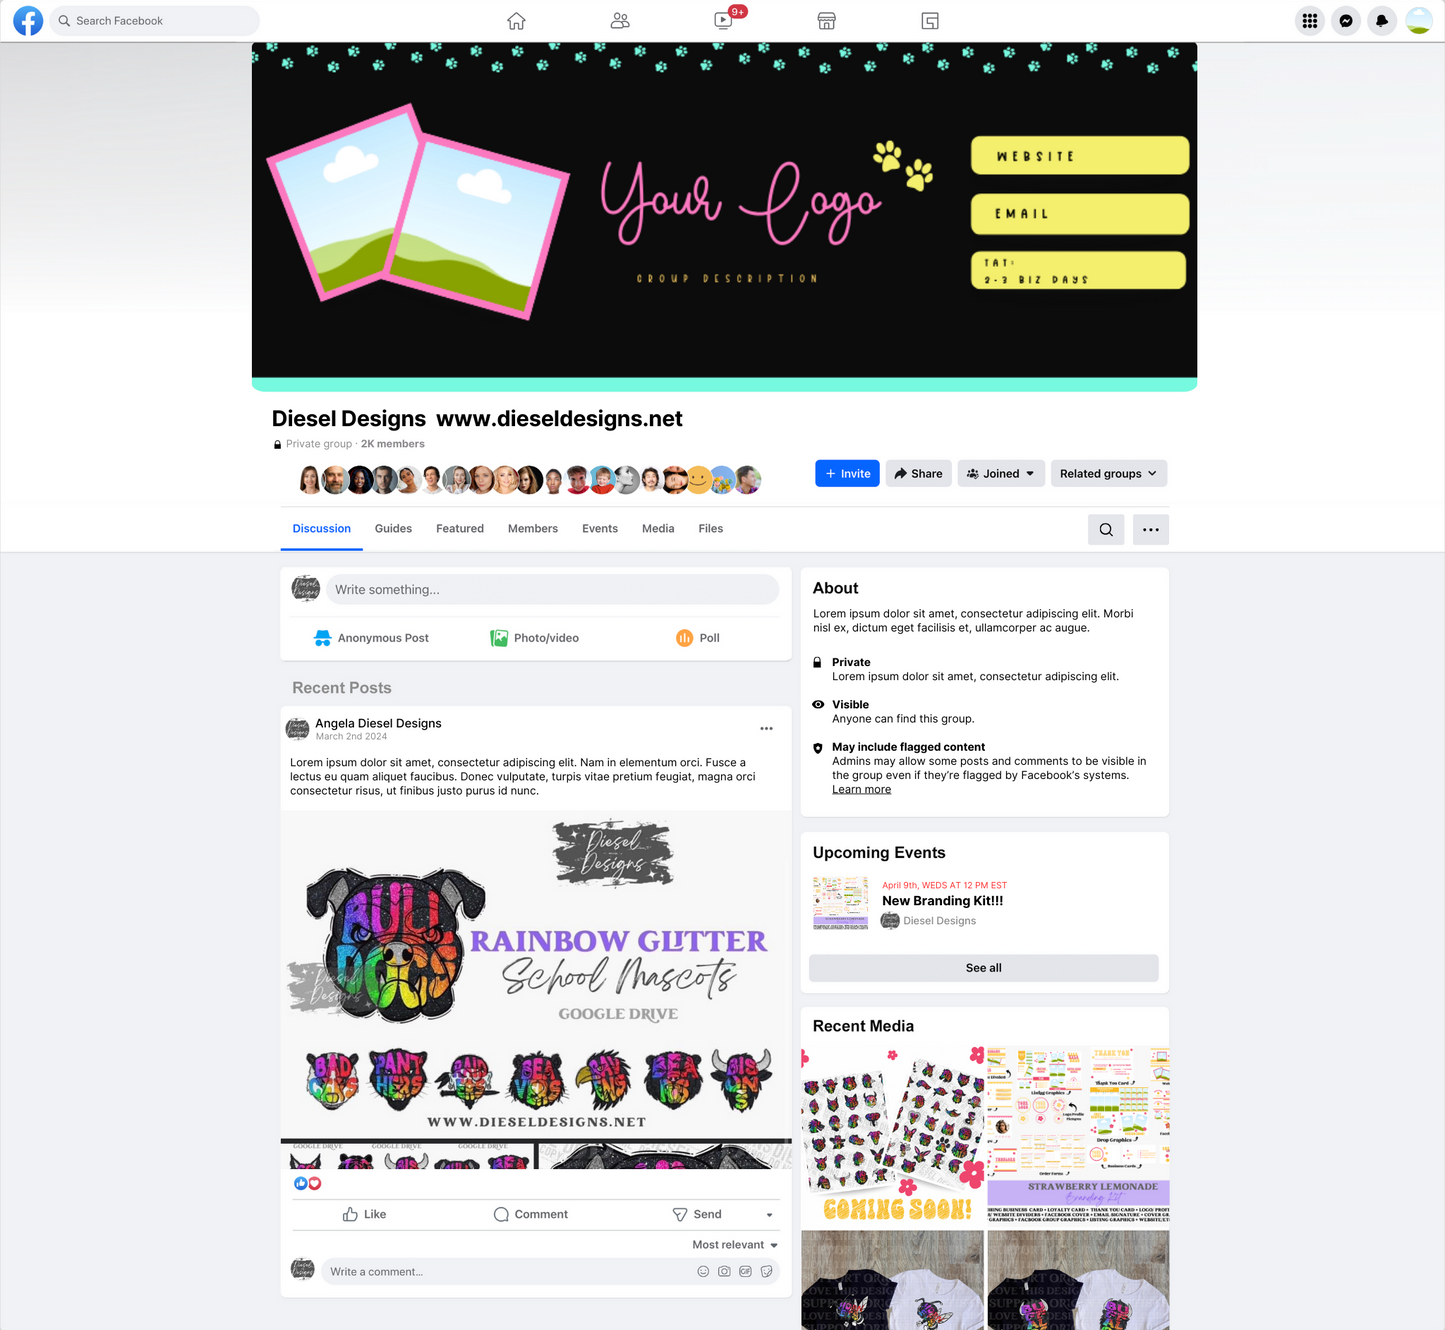 Neon Paws Branding Kit | Website Kit | Business Card | Logo | Facebook Cover | Editable in Canva